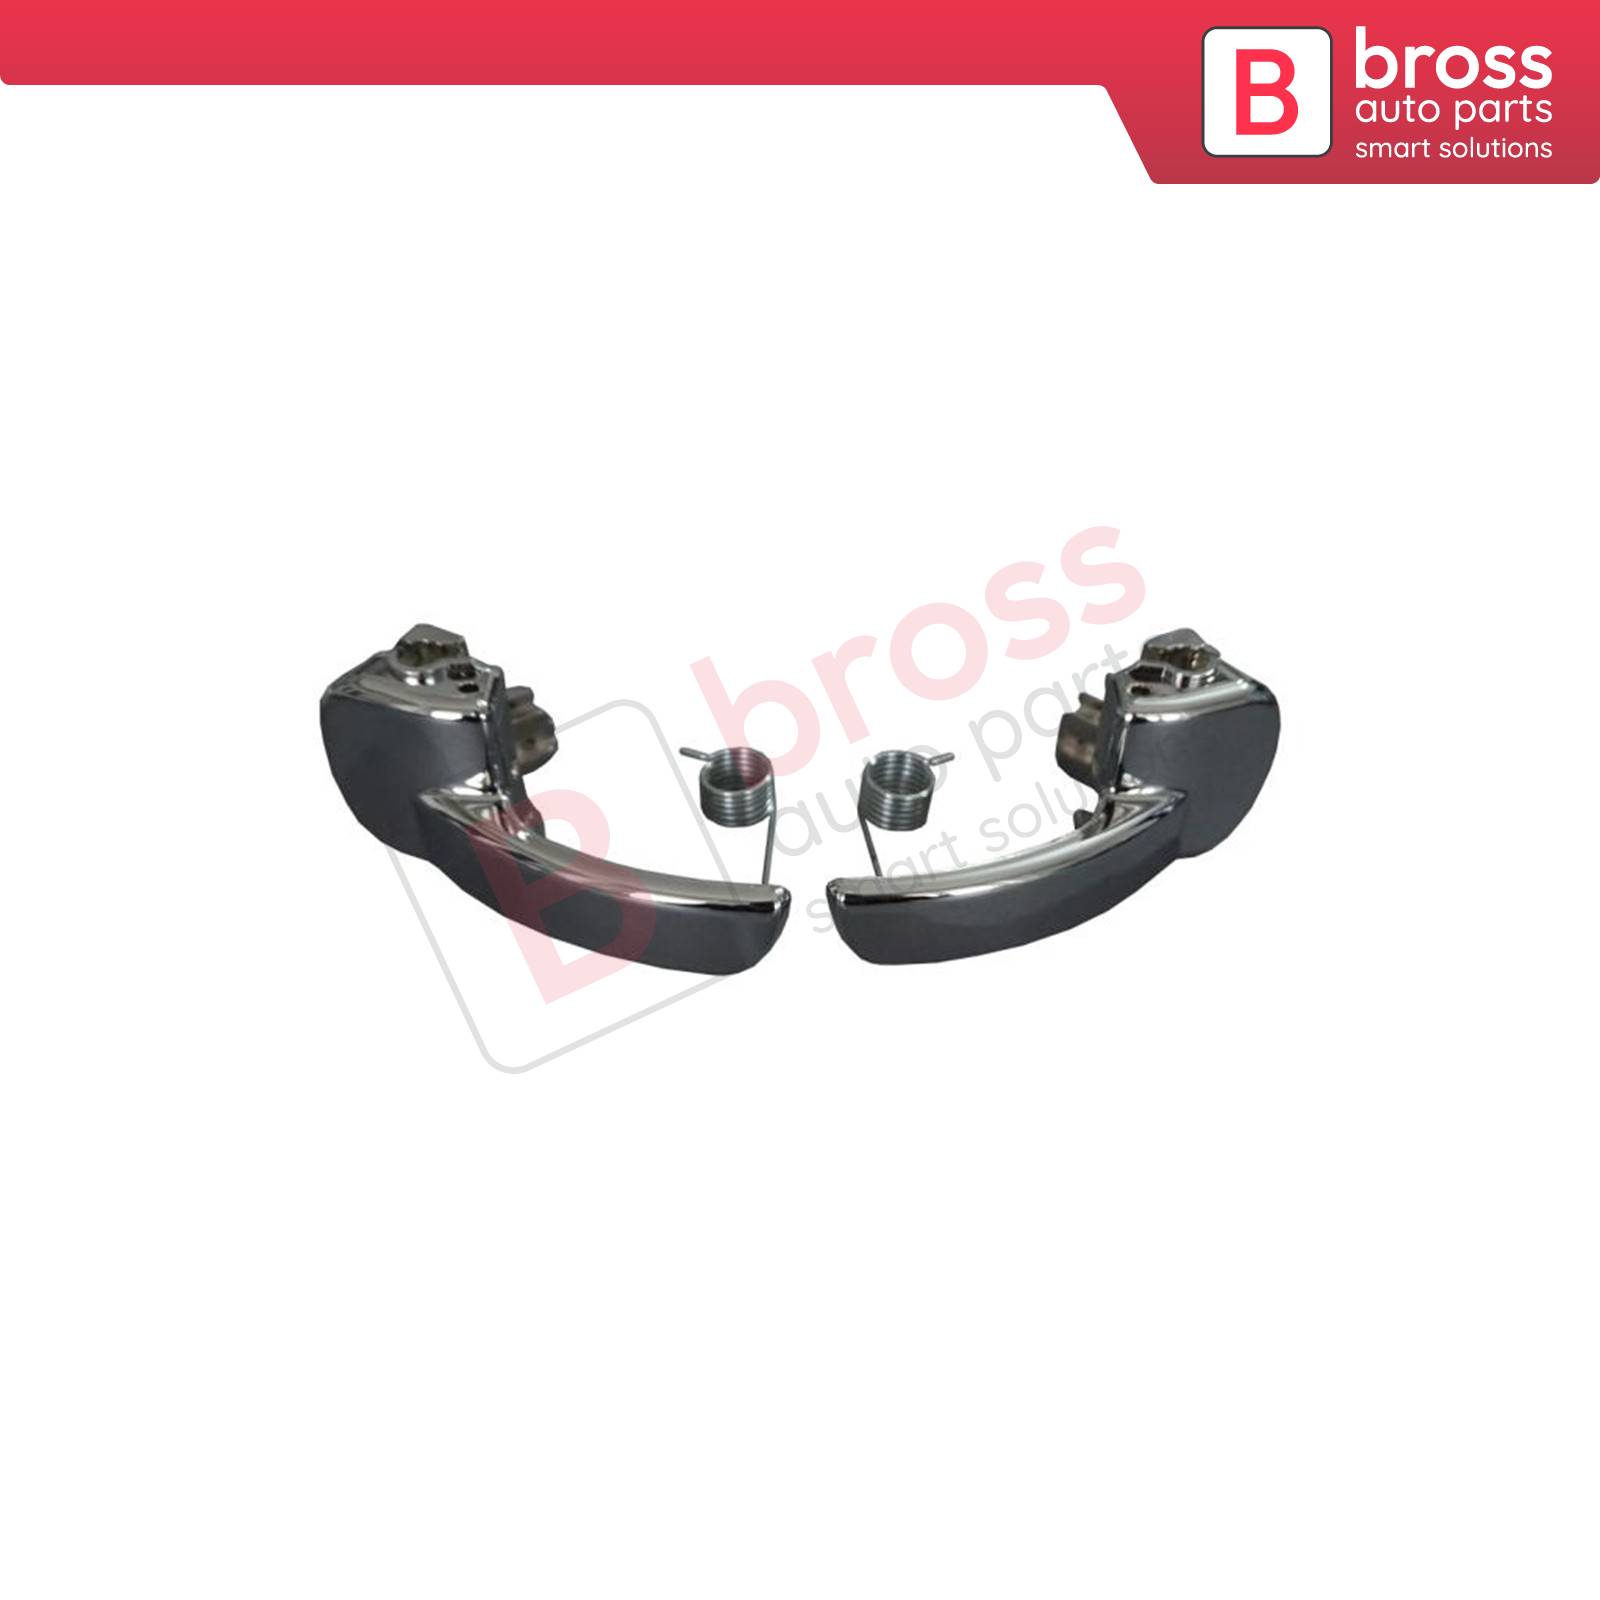 Bross Auto Parts LLC - BDP917 Interior Front or Rear Door Chrome